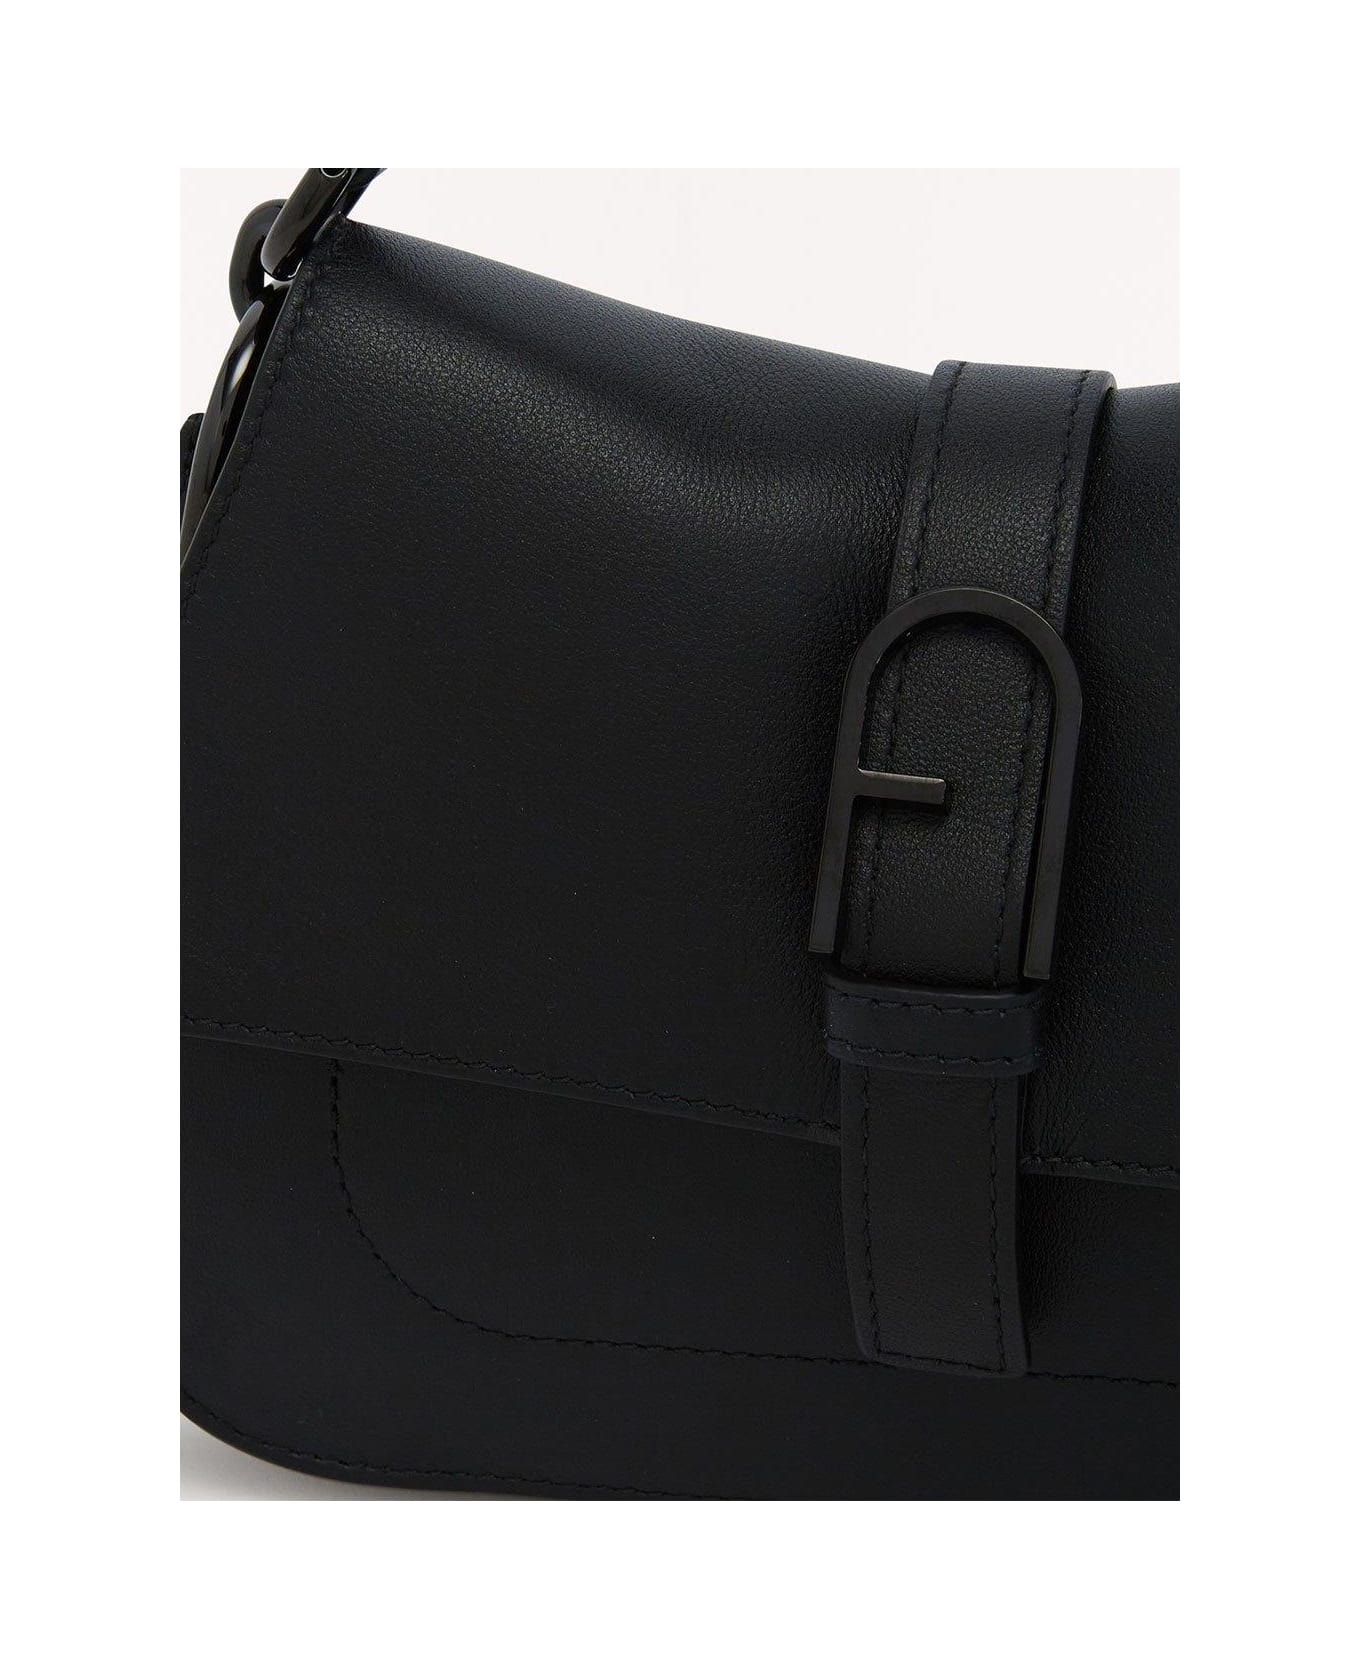 Furla Flow Mini Top Handle Bag - Black